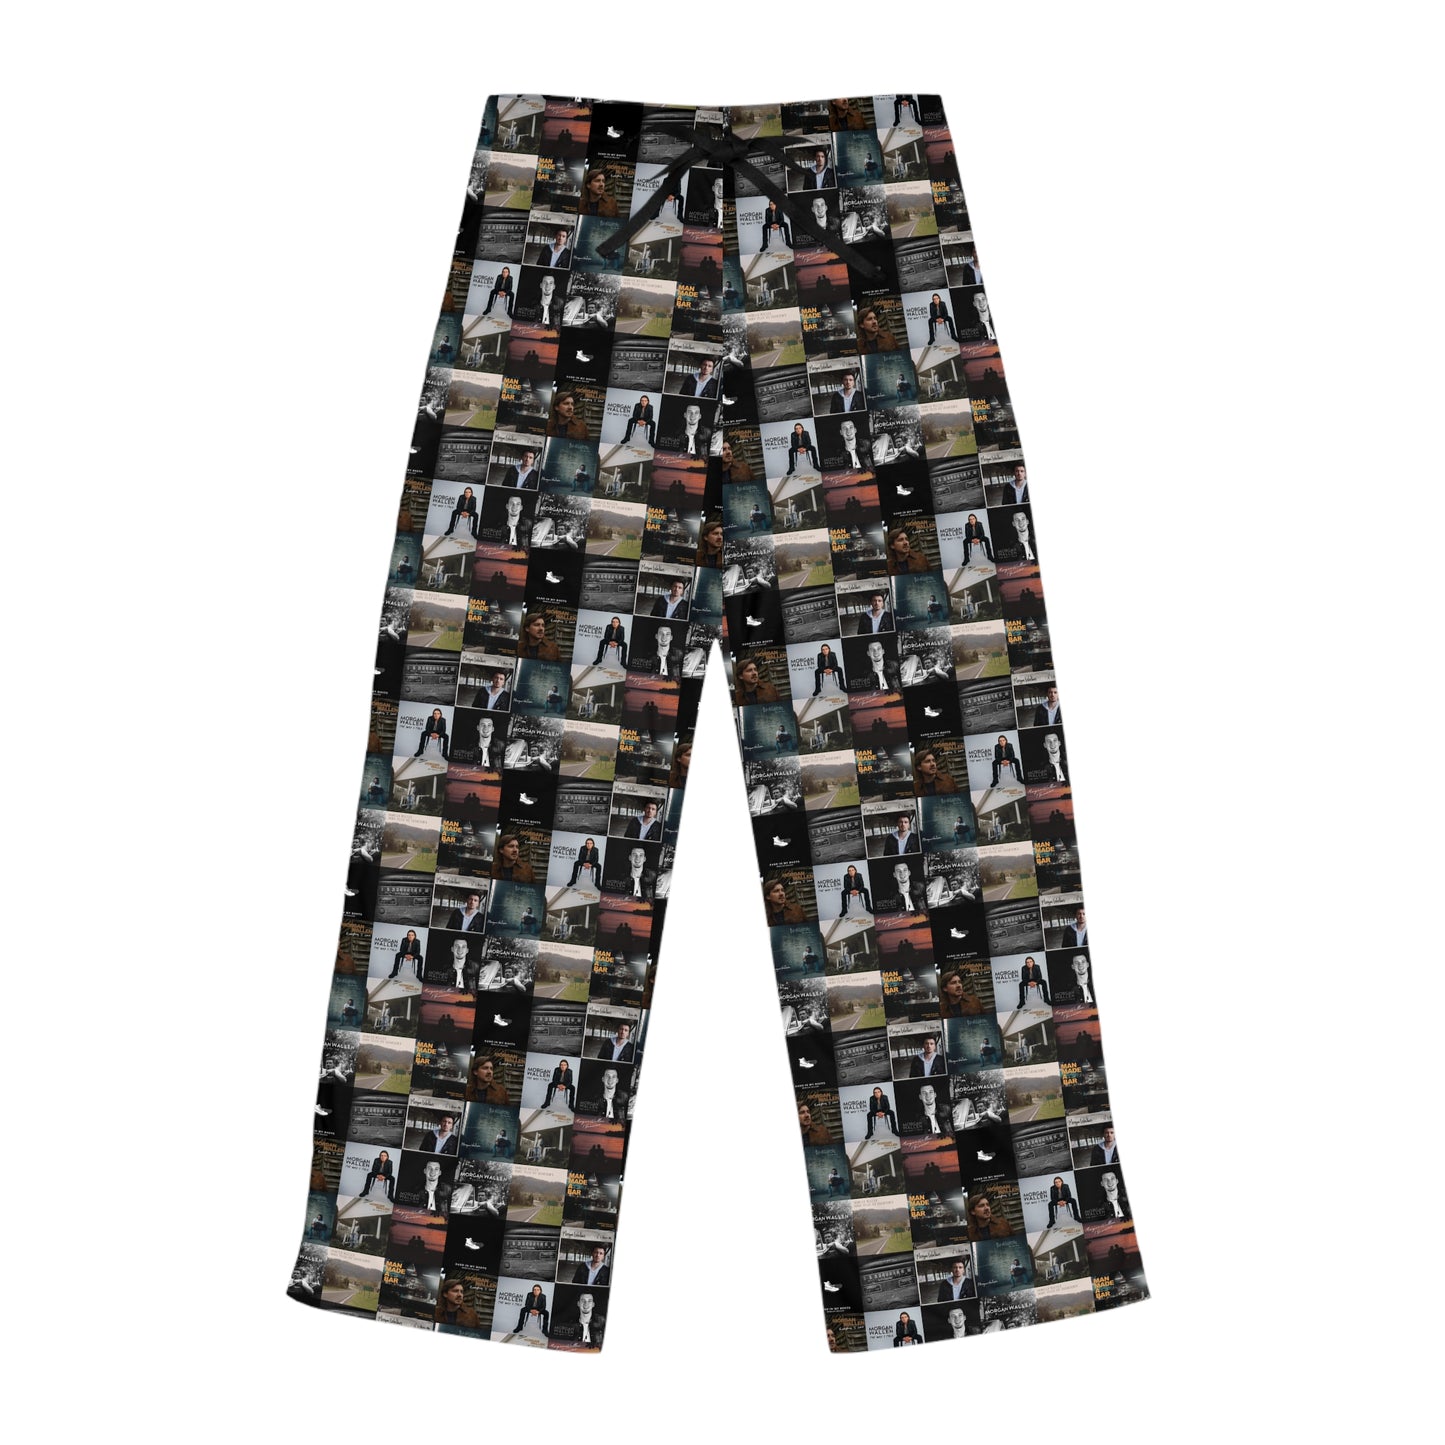 Morgan Wallen Album Cover Collage Women's Pajama Pants